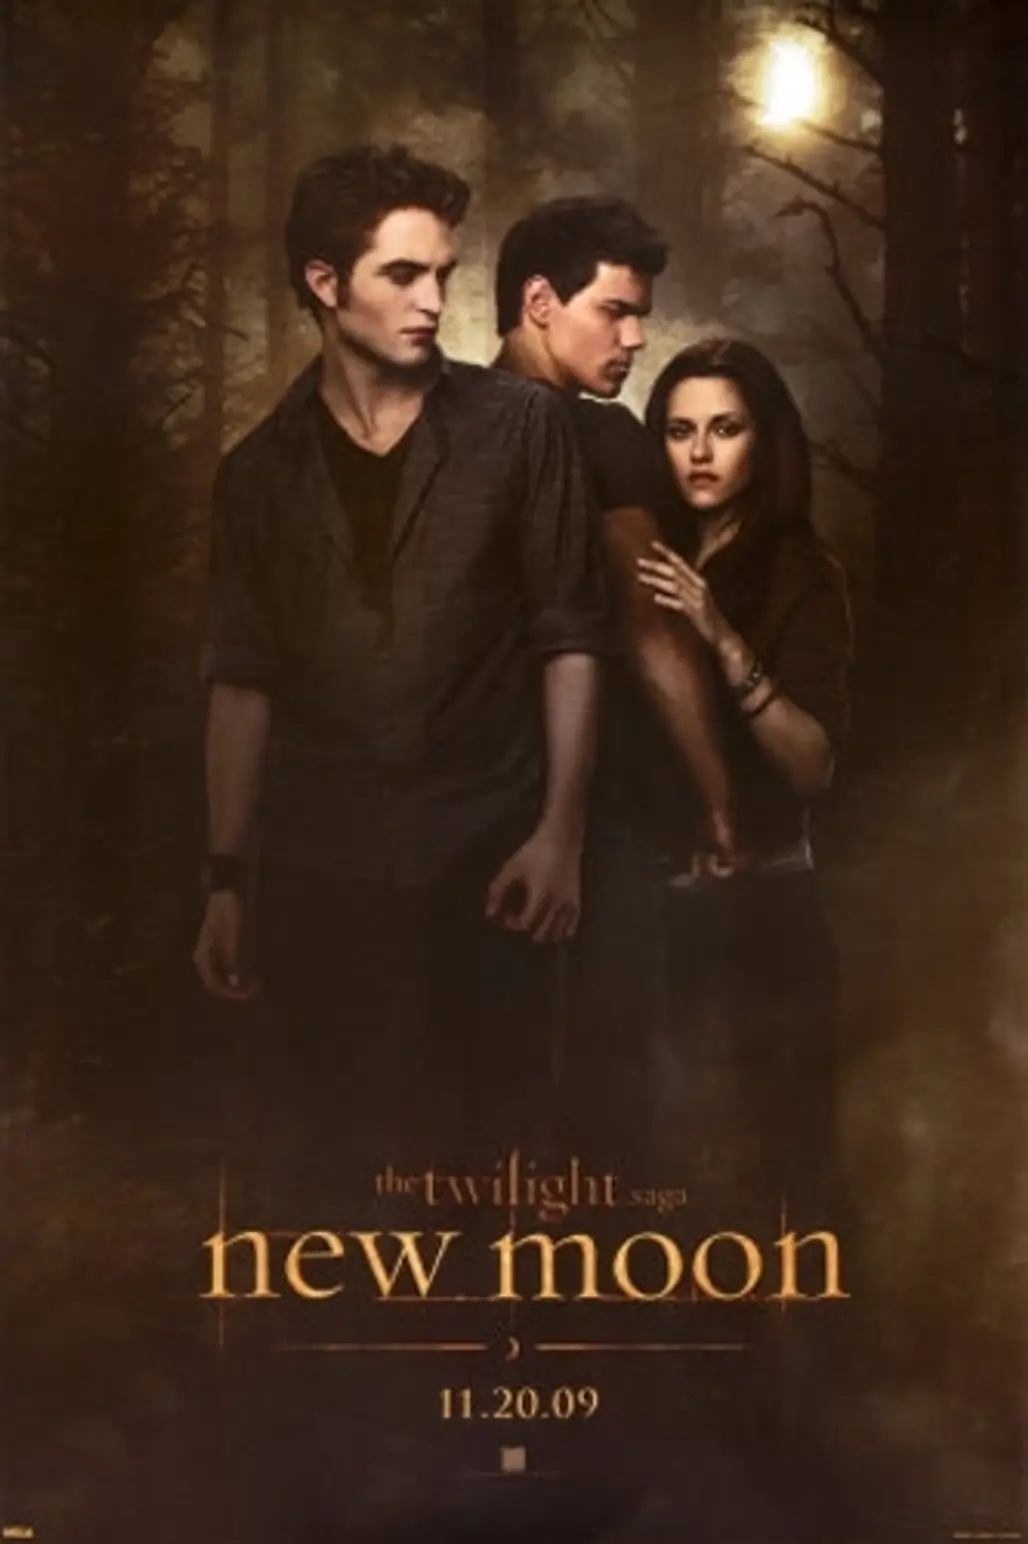 Edward, Jacob, and Bella